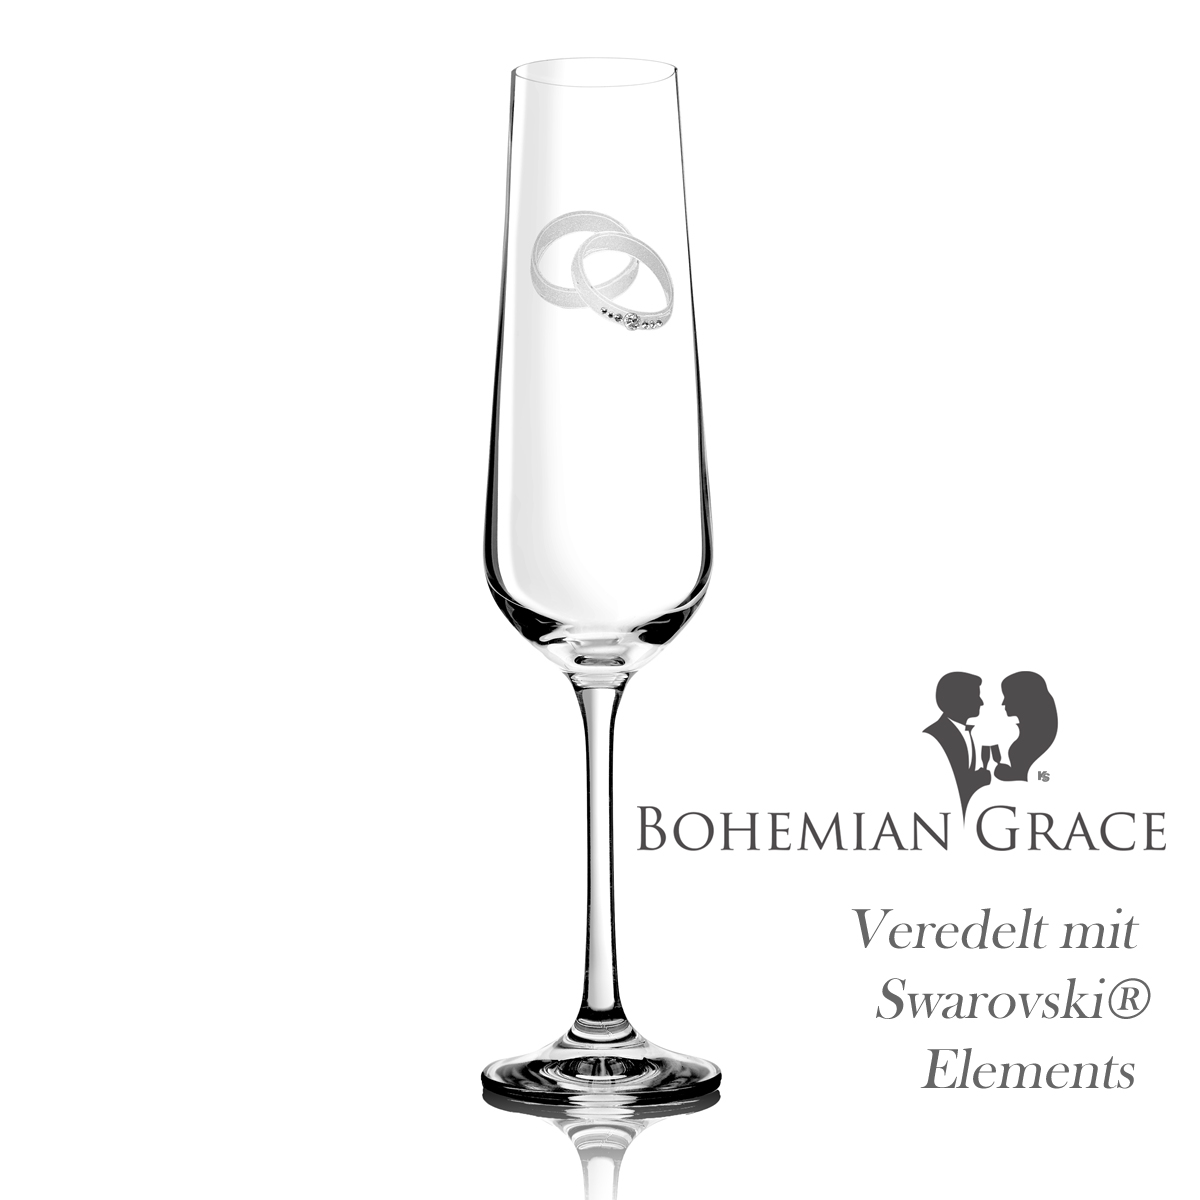 Sektglas ALLEGRO von Bohemian Grace - Champagnerglas ALLEGRO, mit Swarovski Elements